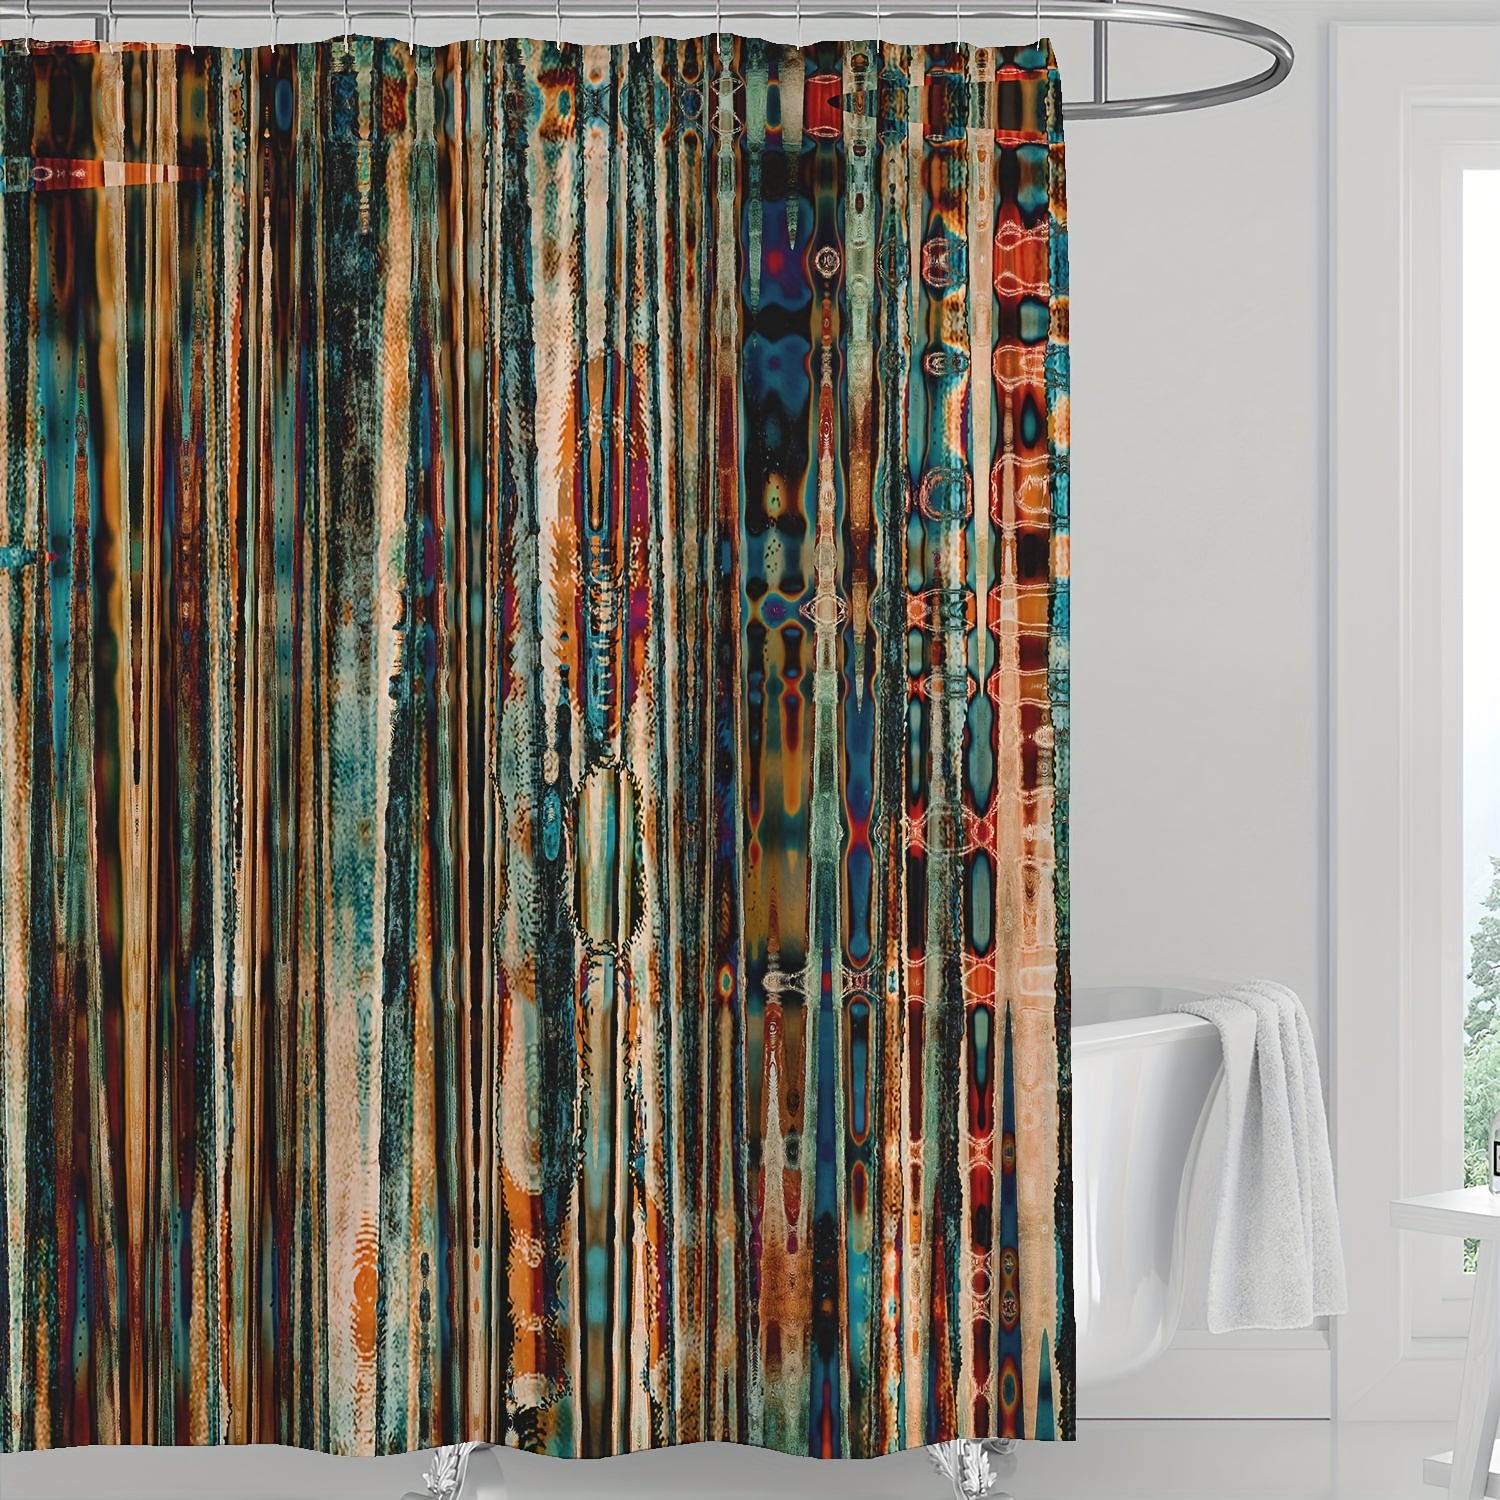 Shower Curtain Retro Shower Curtain for Bathroom 